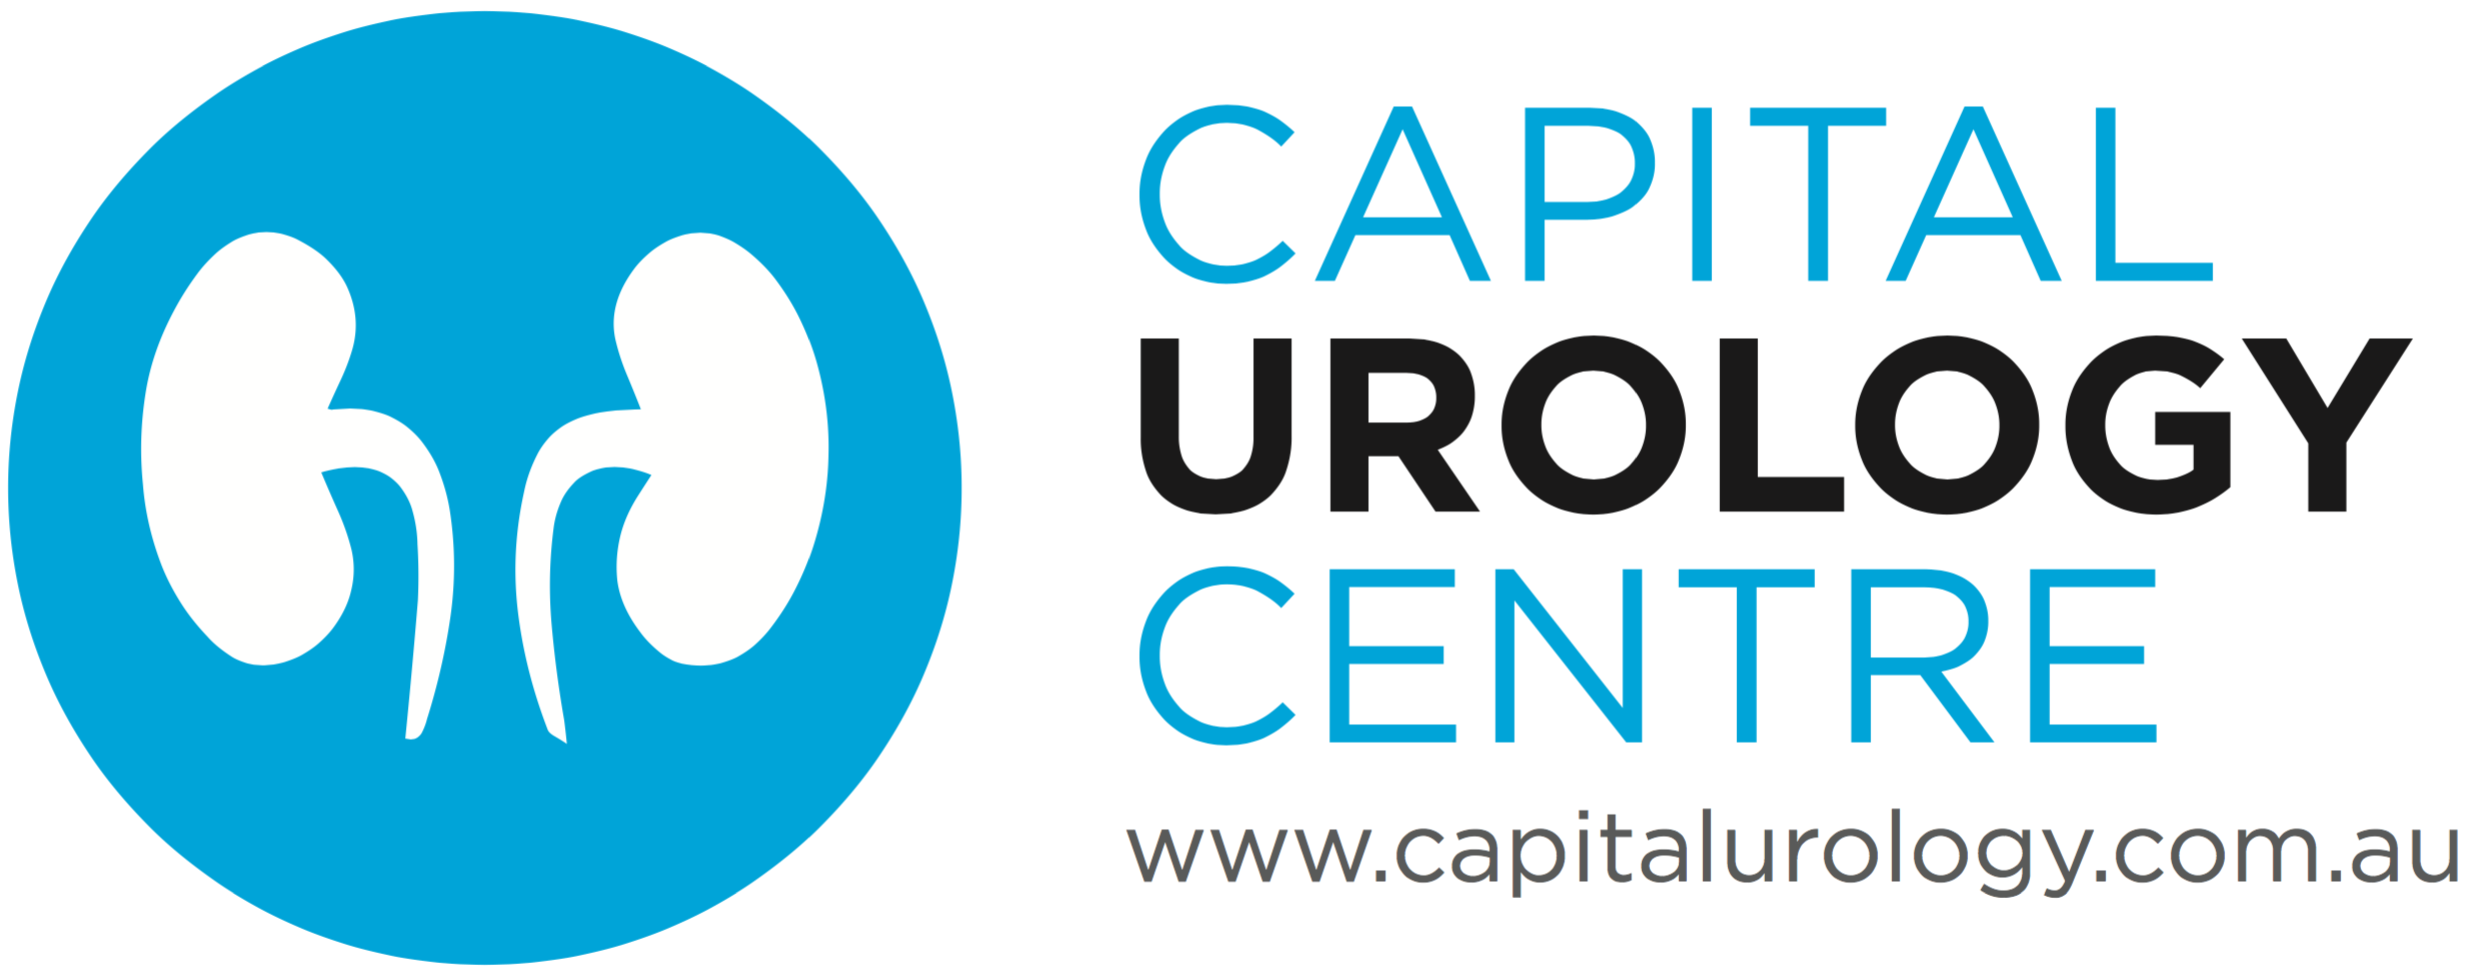 Capital Urology Centre